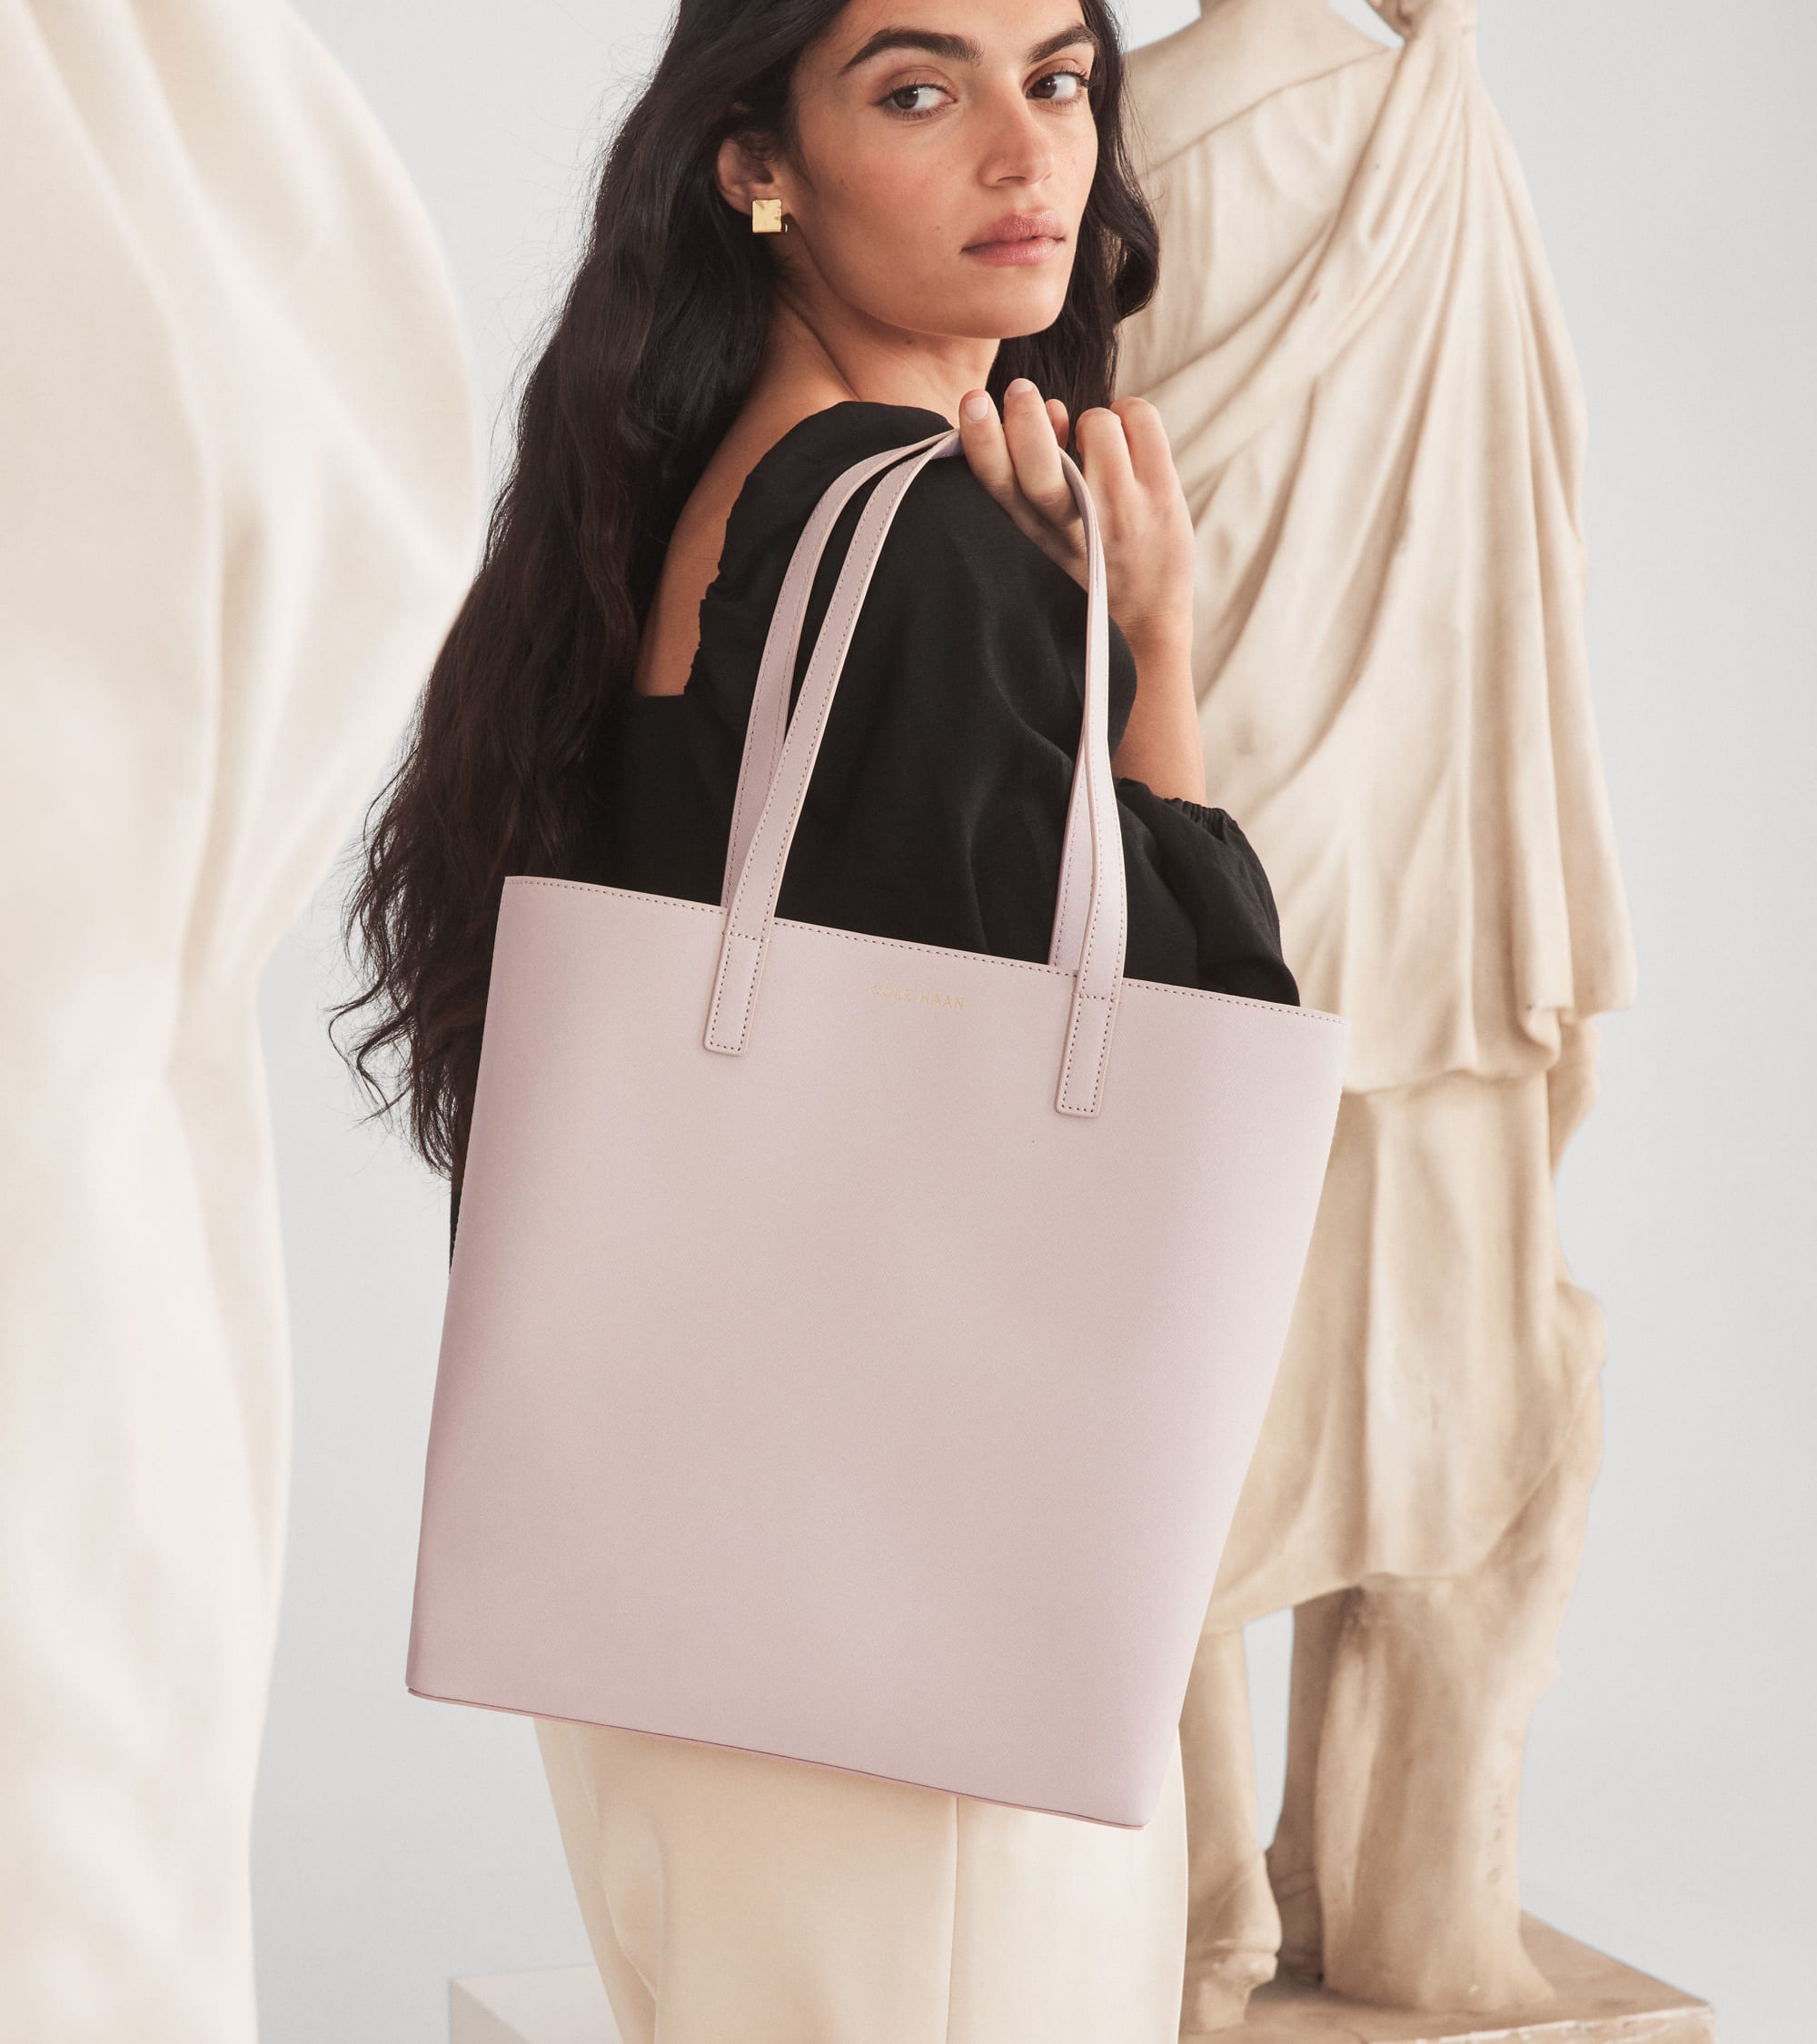 Female model holding a bag